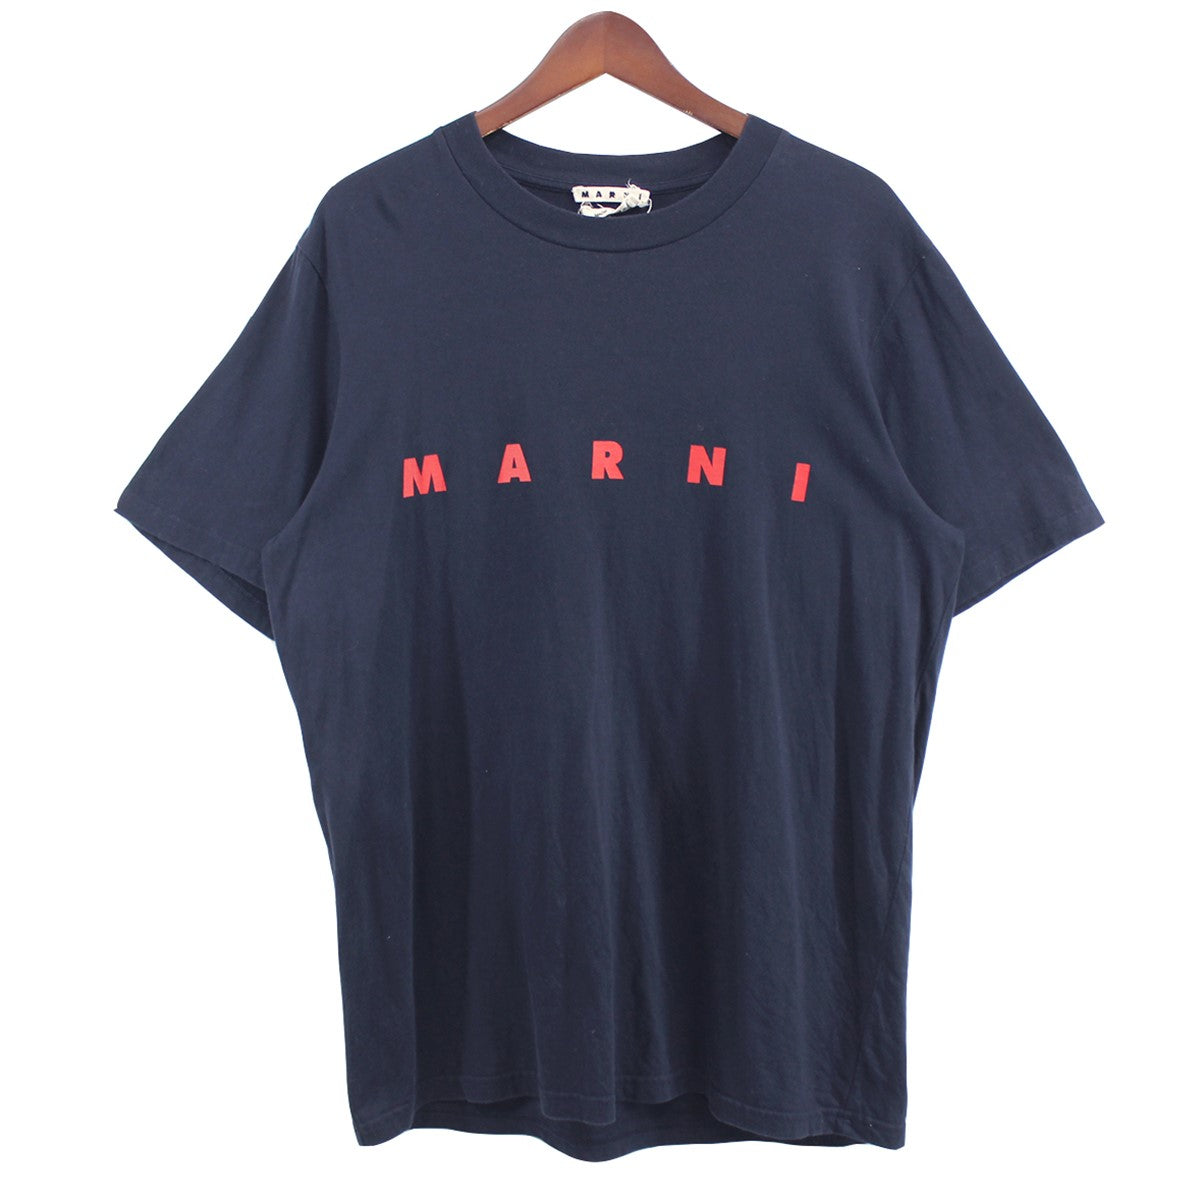 MARNI(マルニ) 20AW Marni Logo Print T-Shirt ロゴ プリント Tシャツ ...